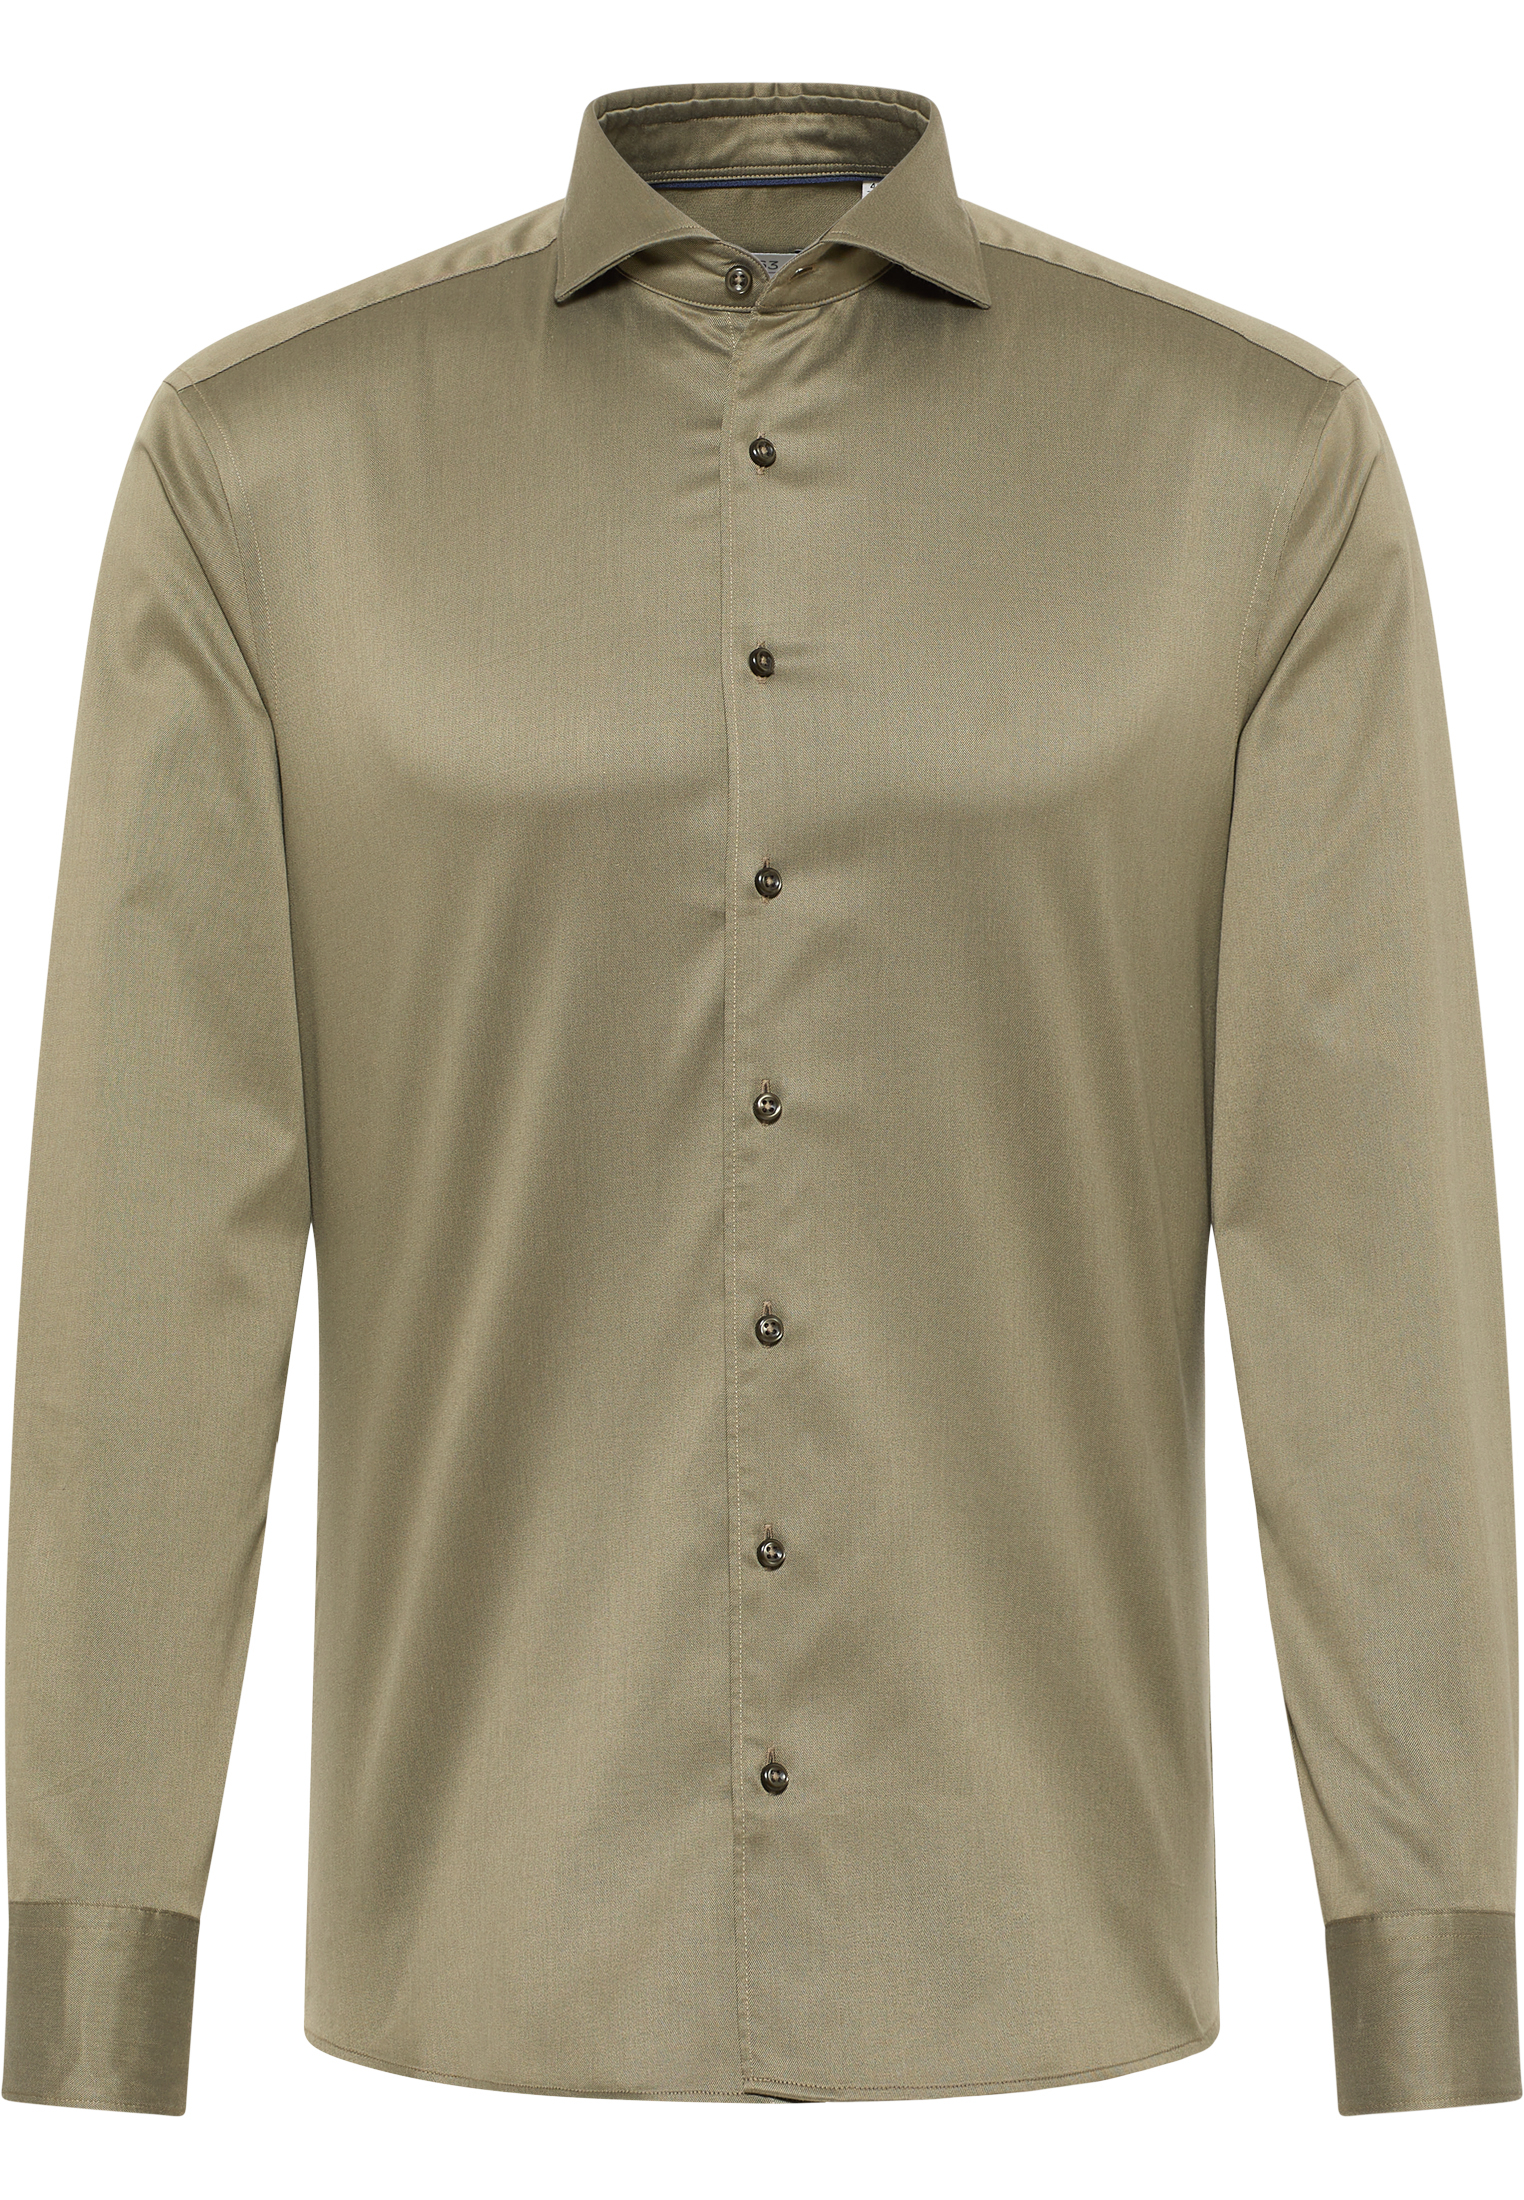 SLIM FIT Soft Luxury Shirt in steel grey plain